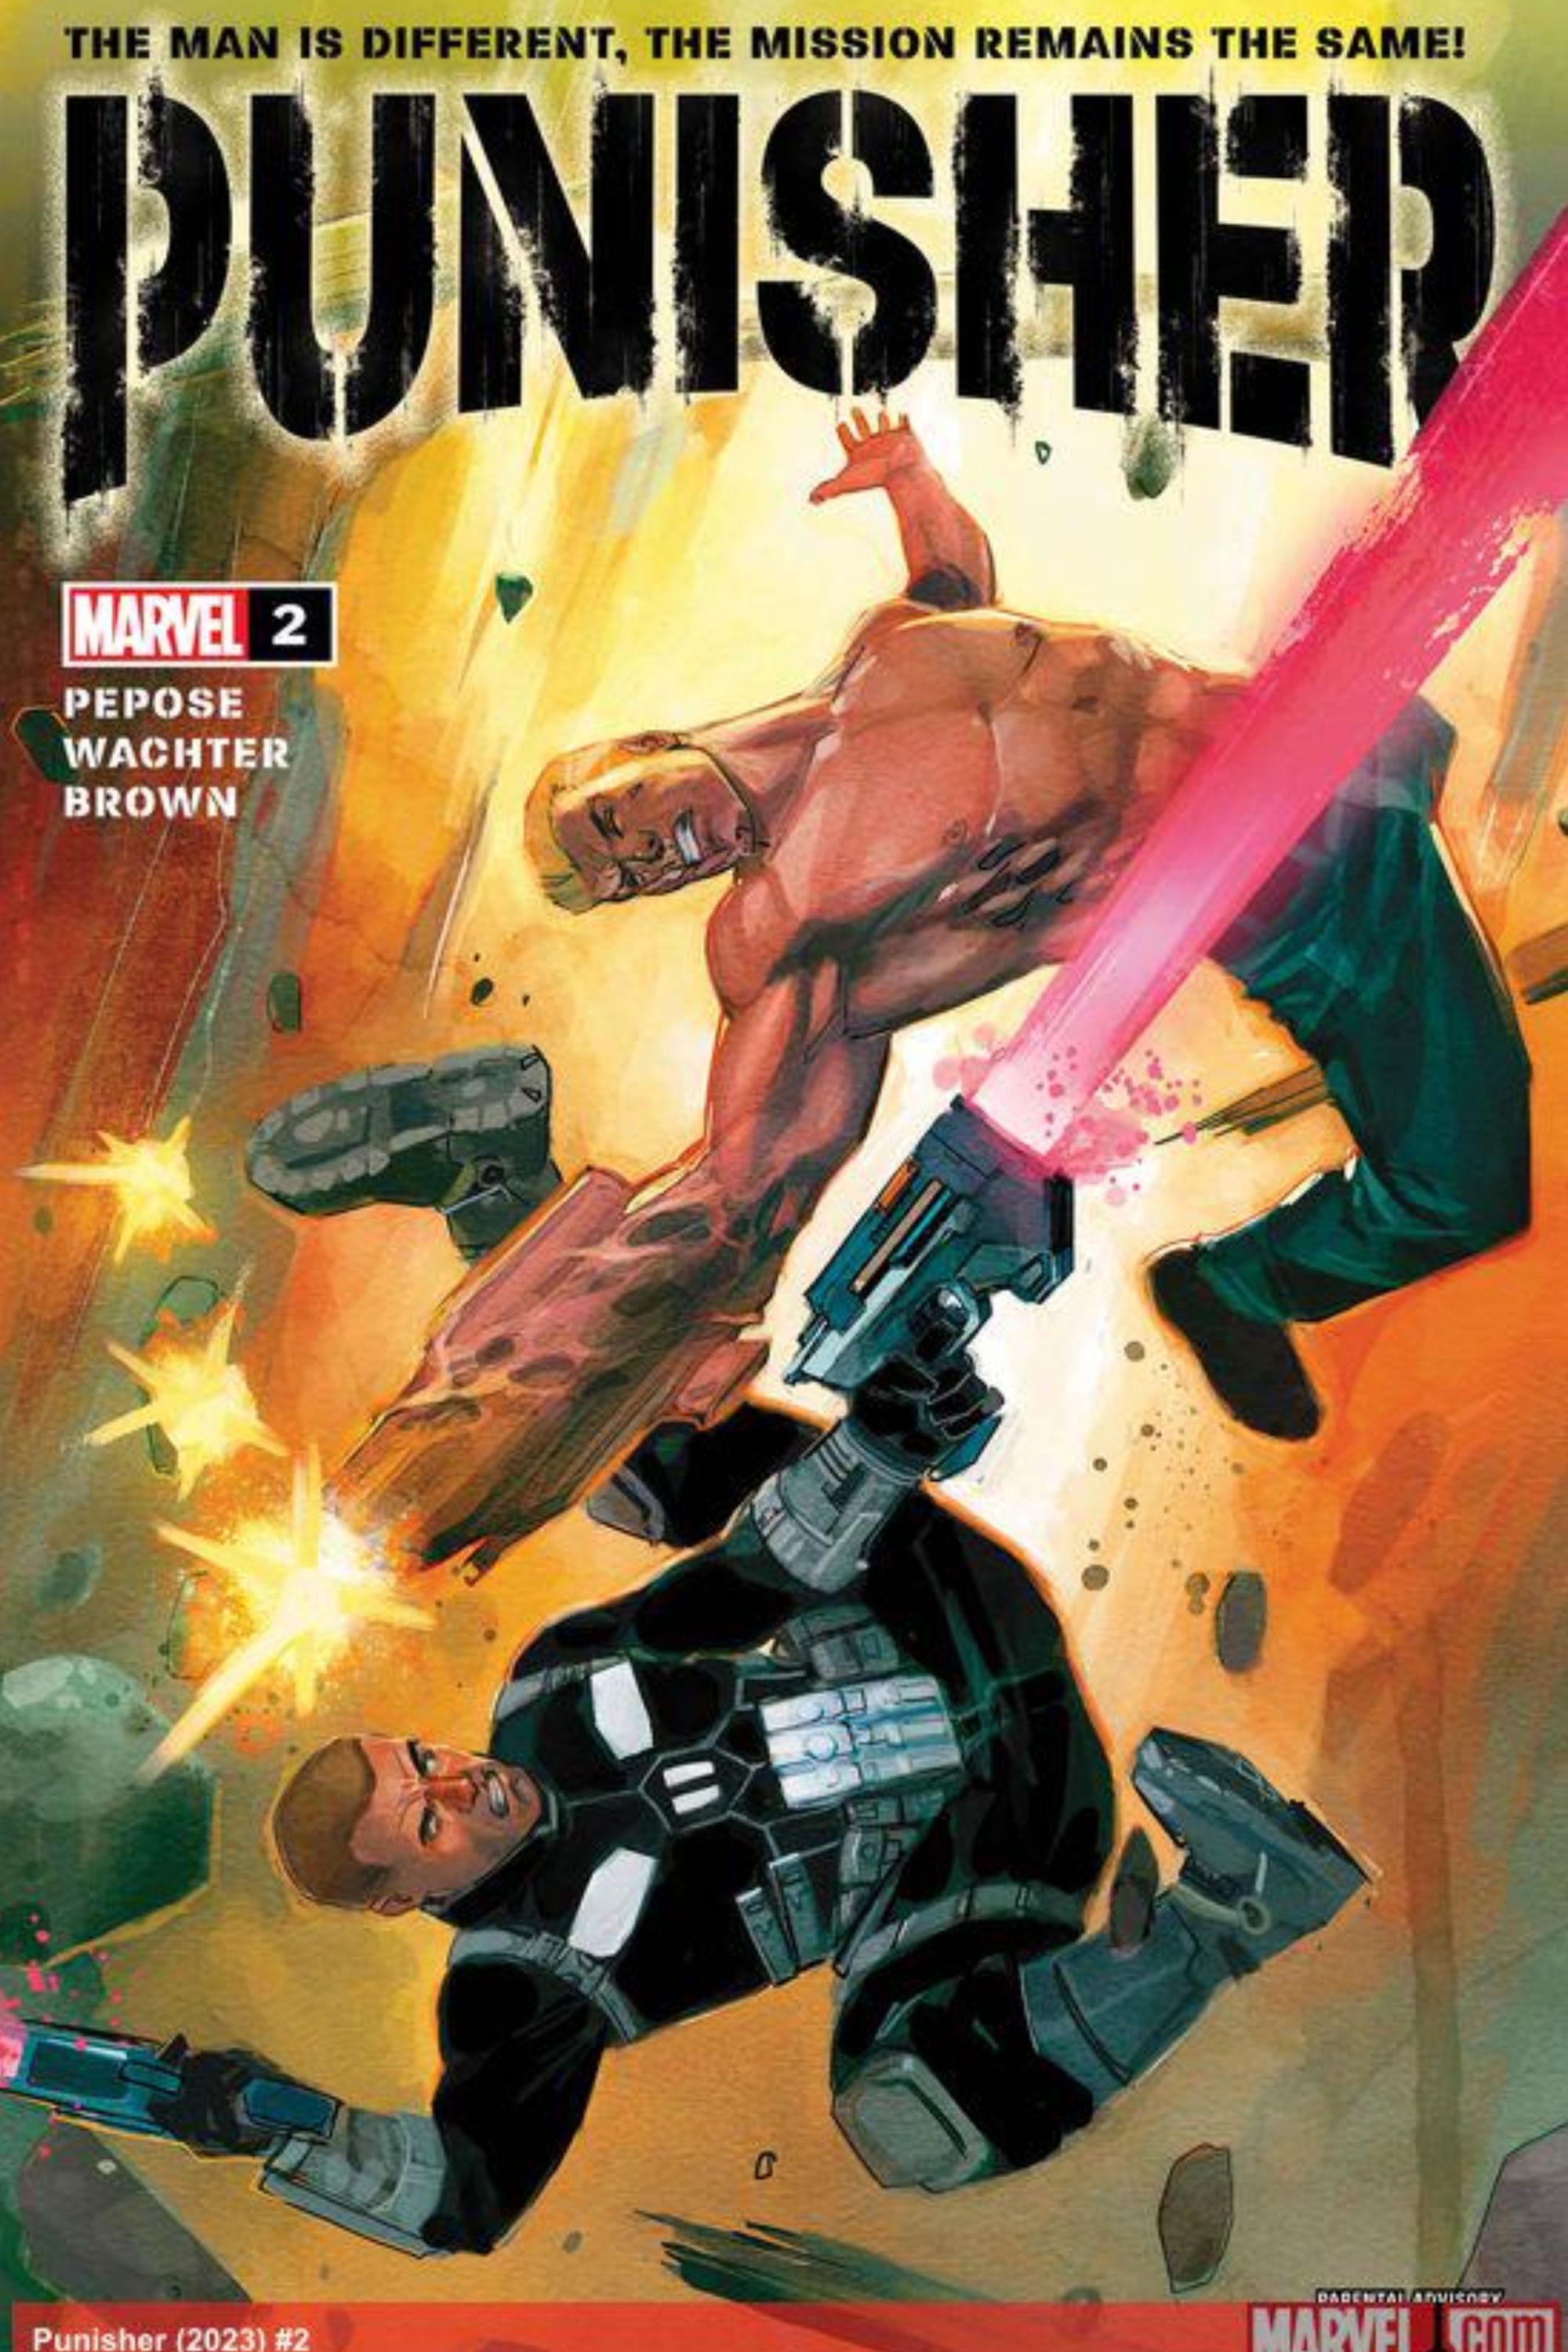 New Punisher Joe Garrison fights the Bushwhacker in The Punisher #2